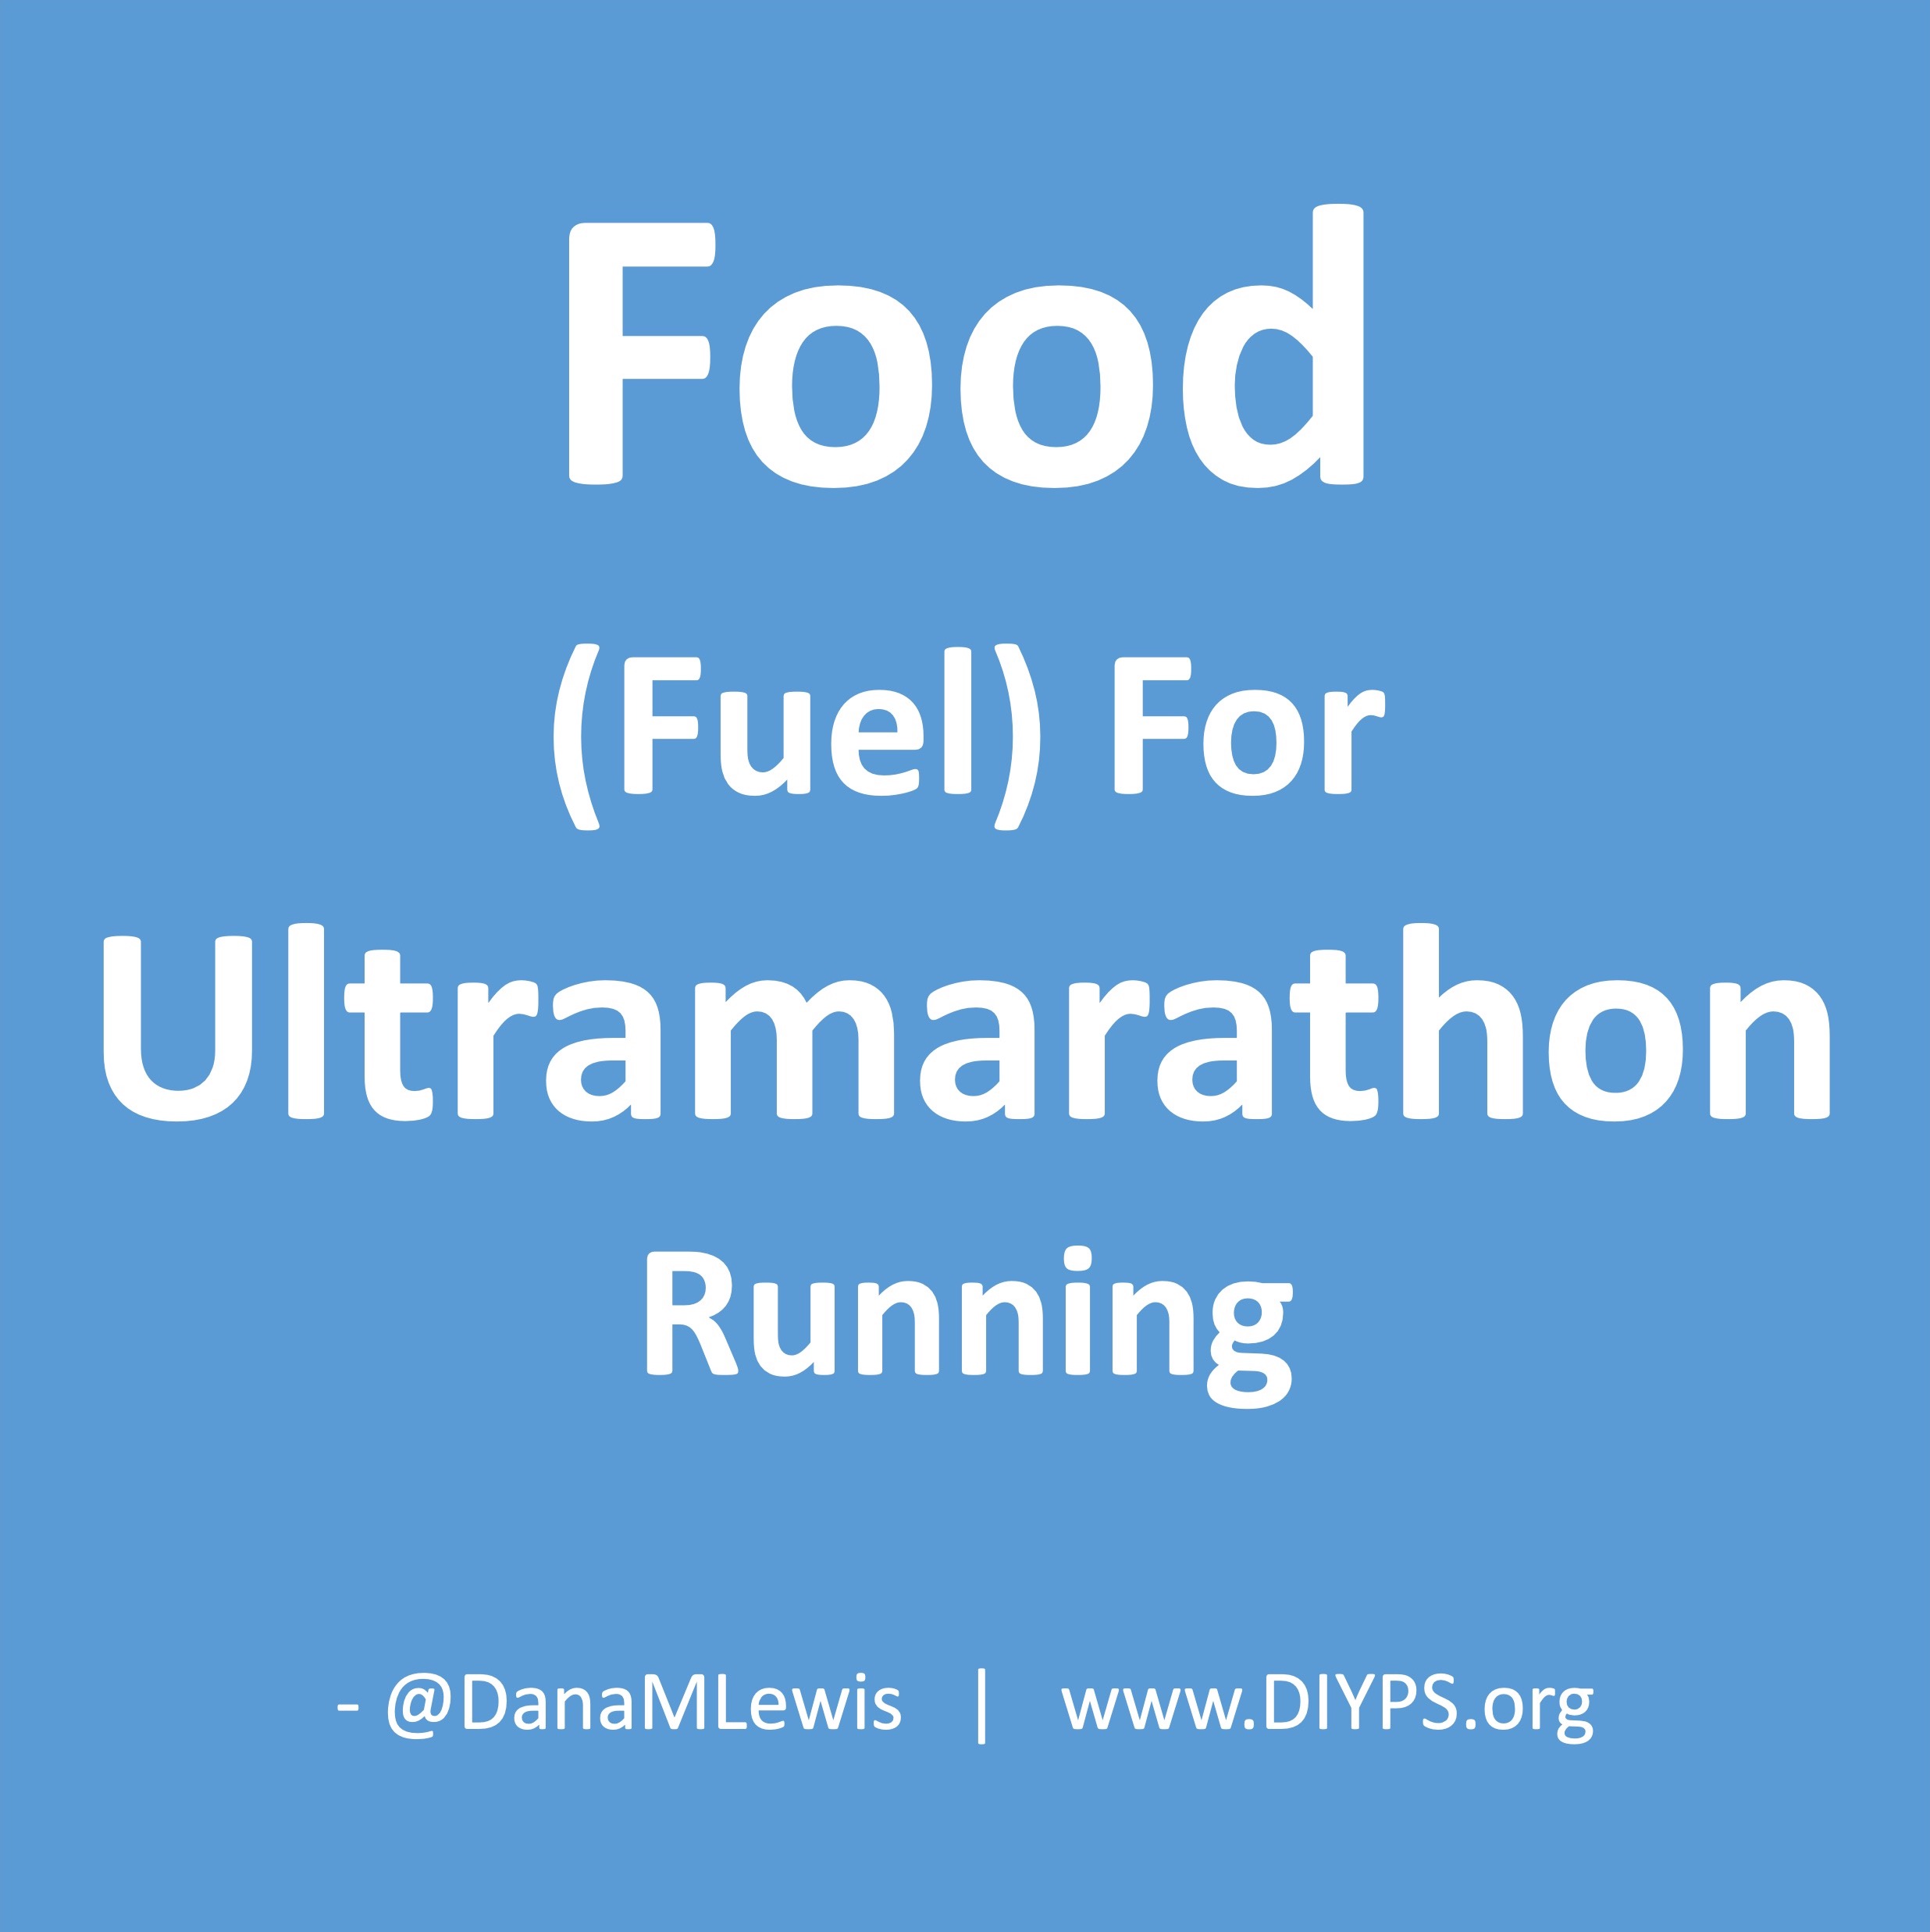 Food (fuel) for ultramarathon running by Dana Lewis at DIYPS.org